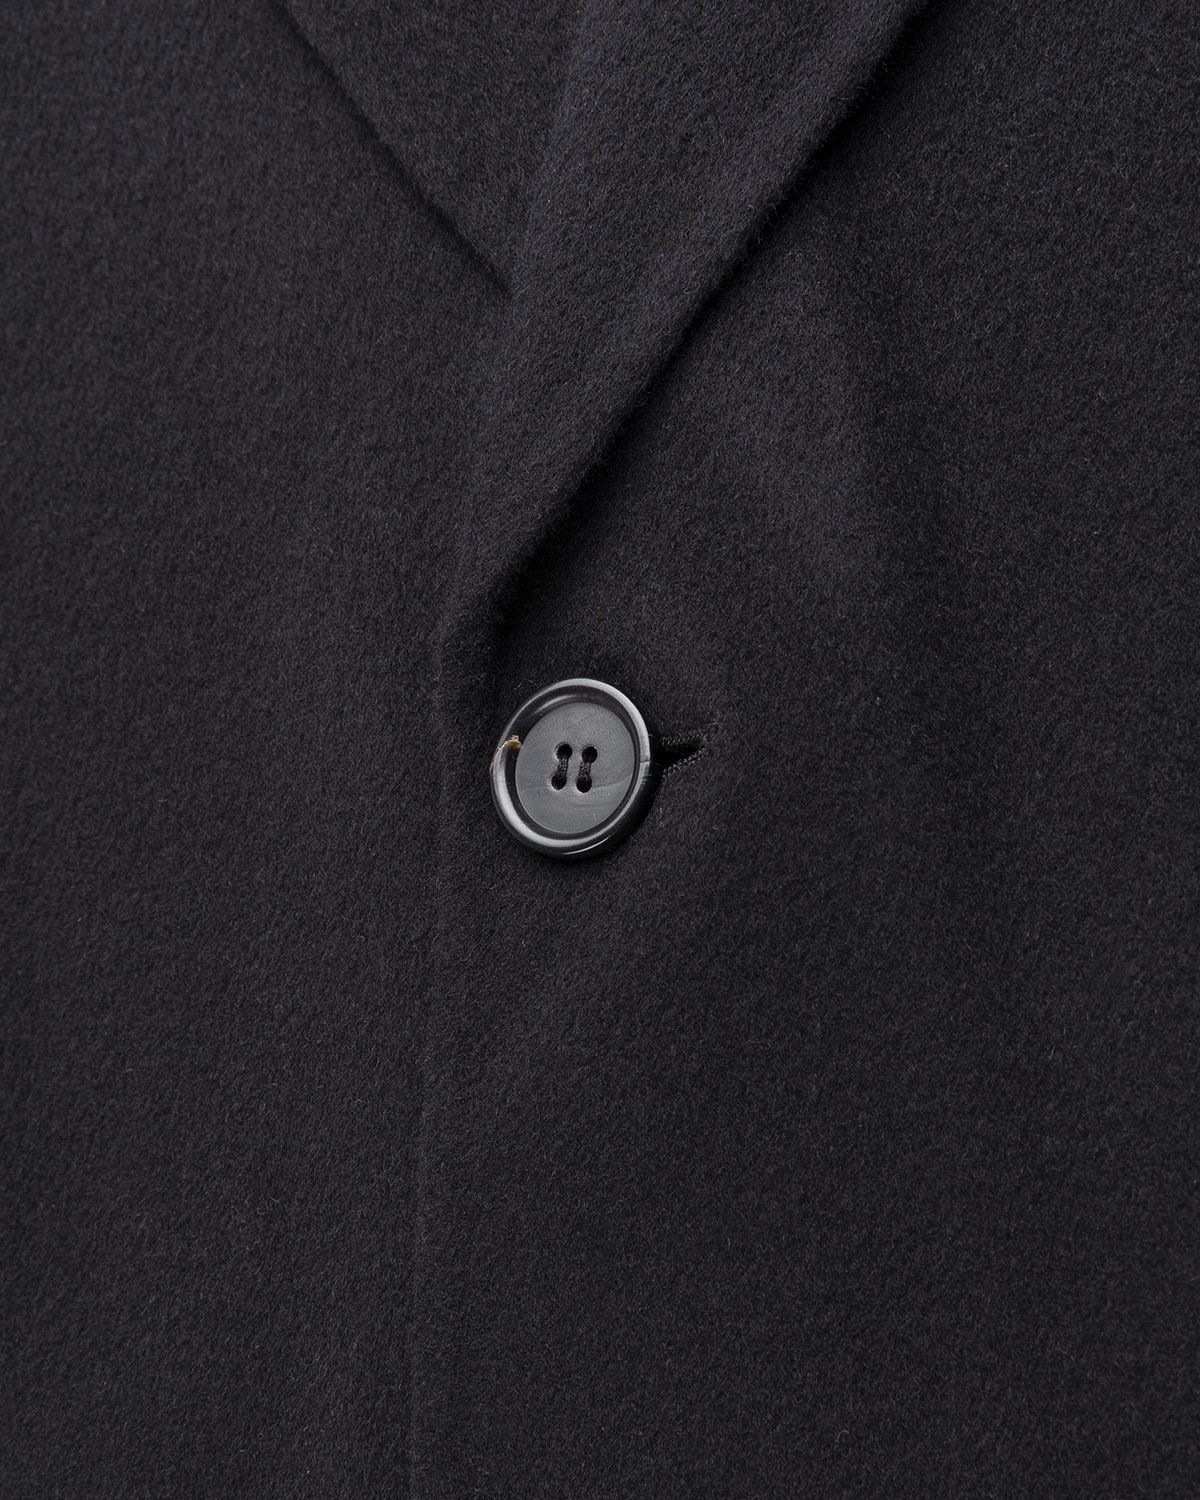 Acne Studios – Doubleface Coat Black - Image 4